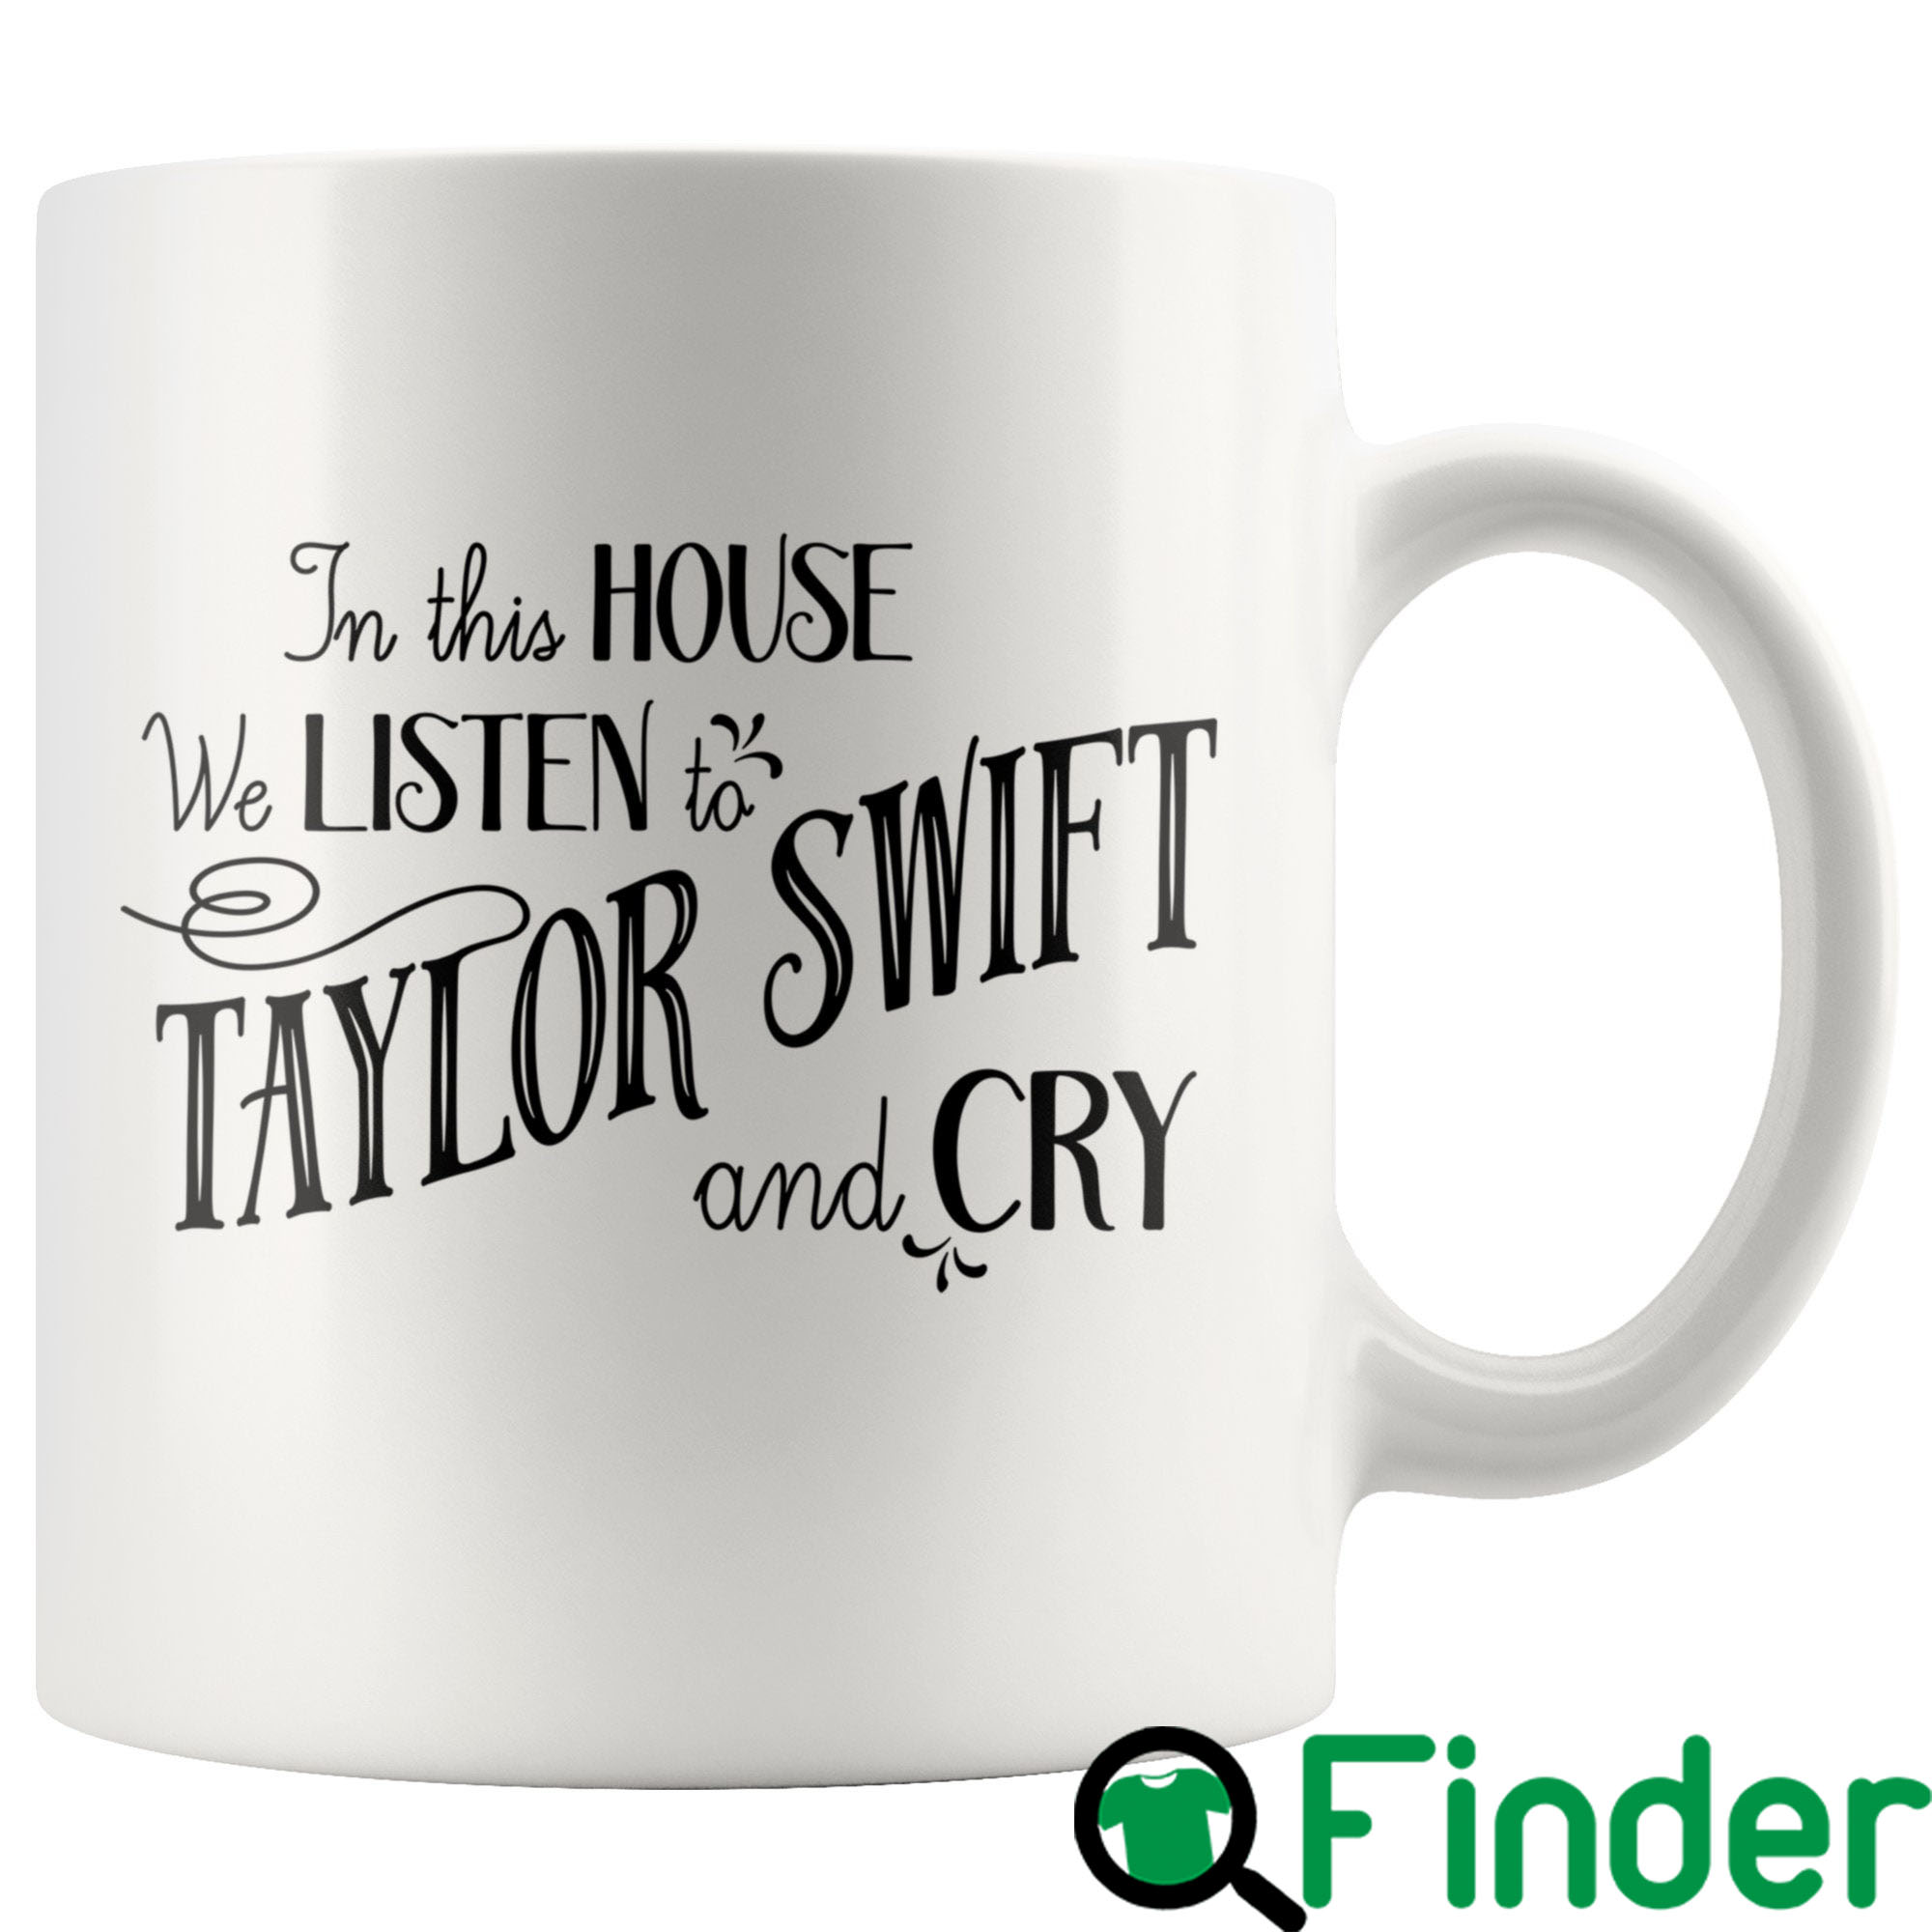 Taylor Swift Coffee Mug Taylor Swift Accent Mug Taylors Version